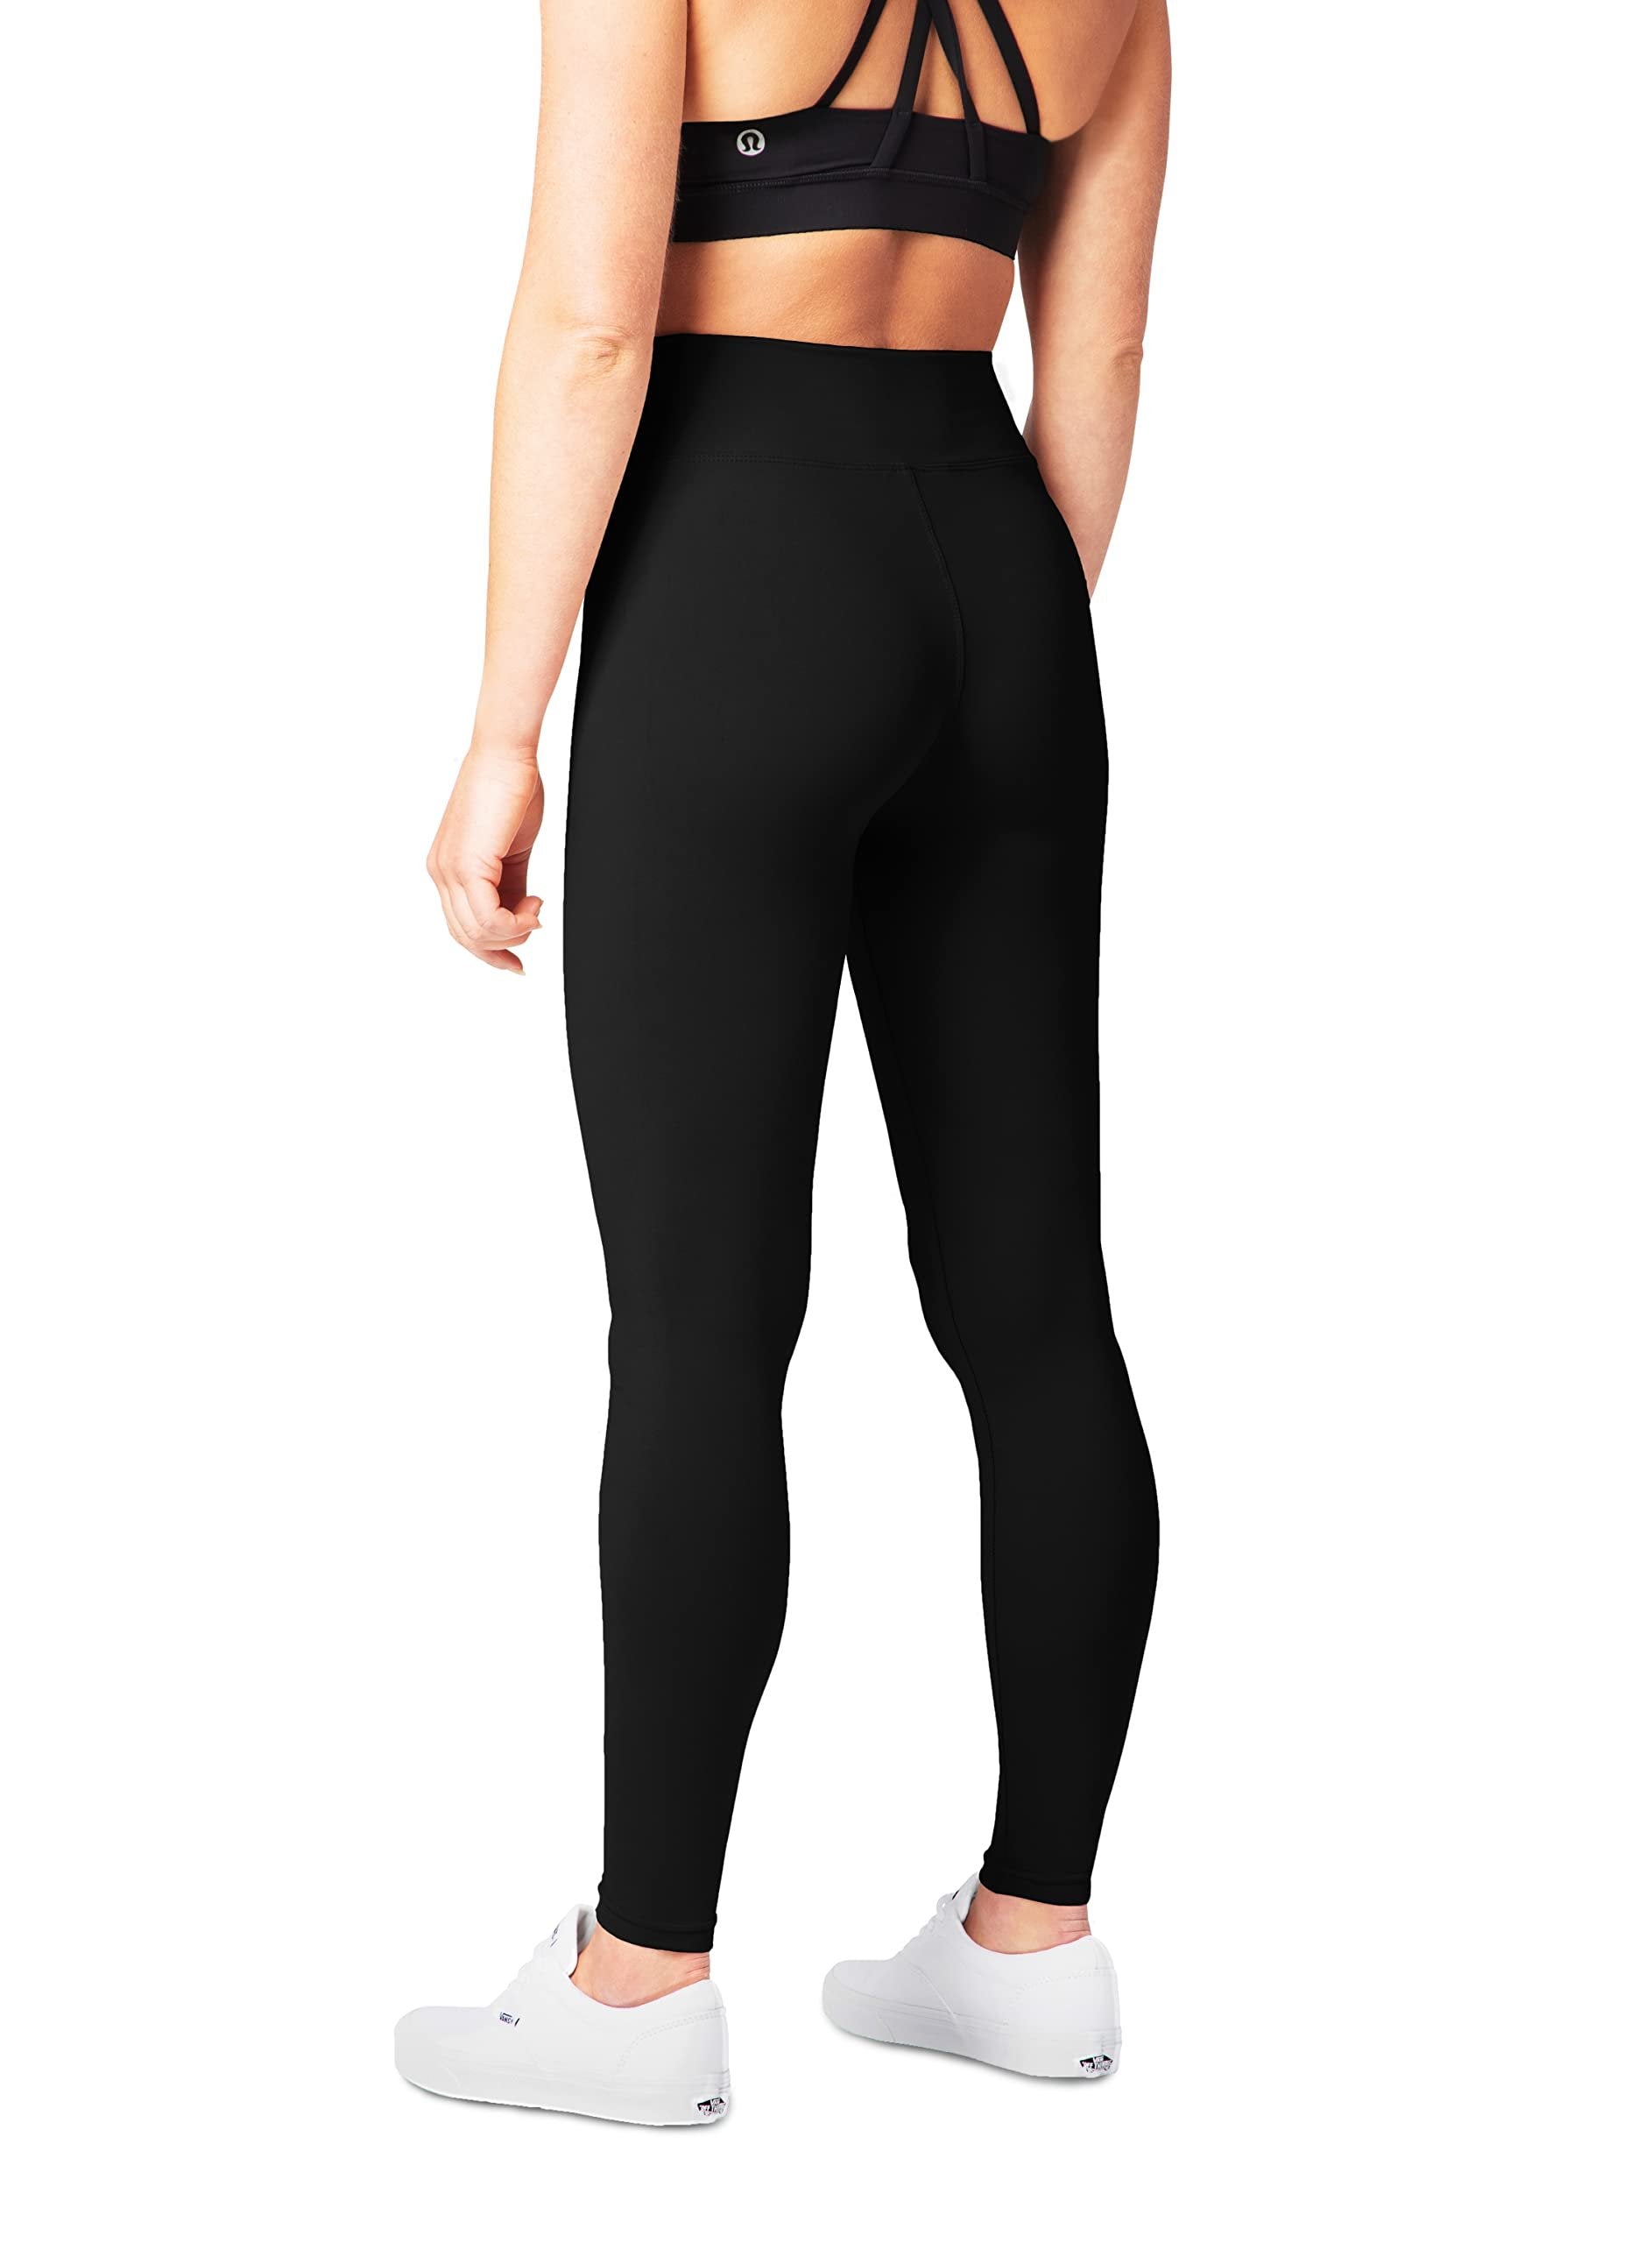 SATINA High Waisted Yoga Pants Black Plus Size 3" Waistband